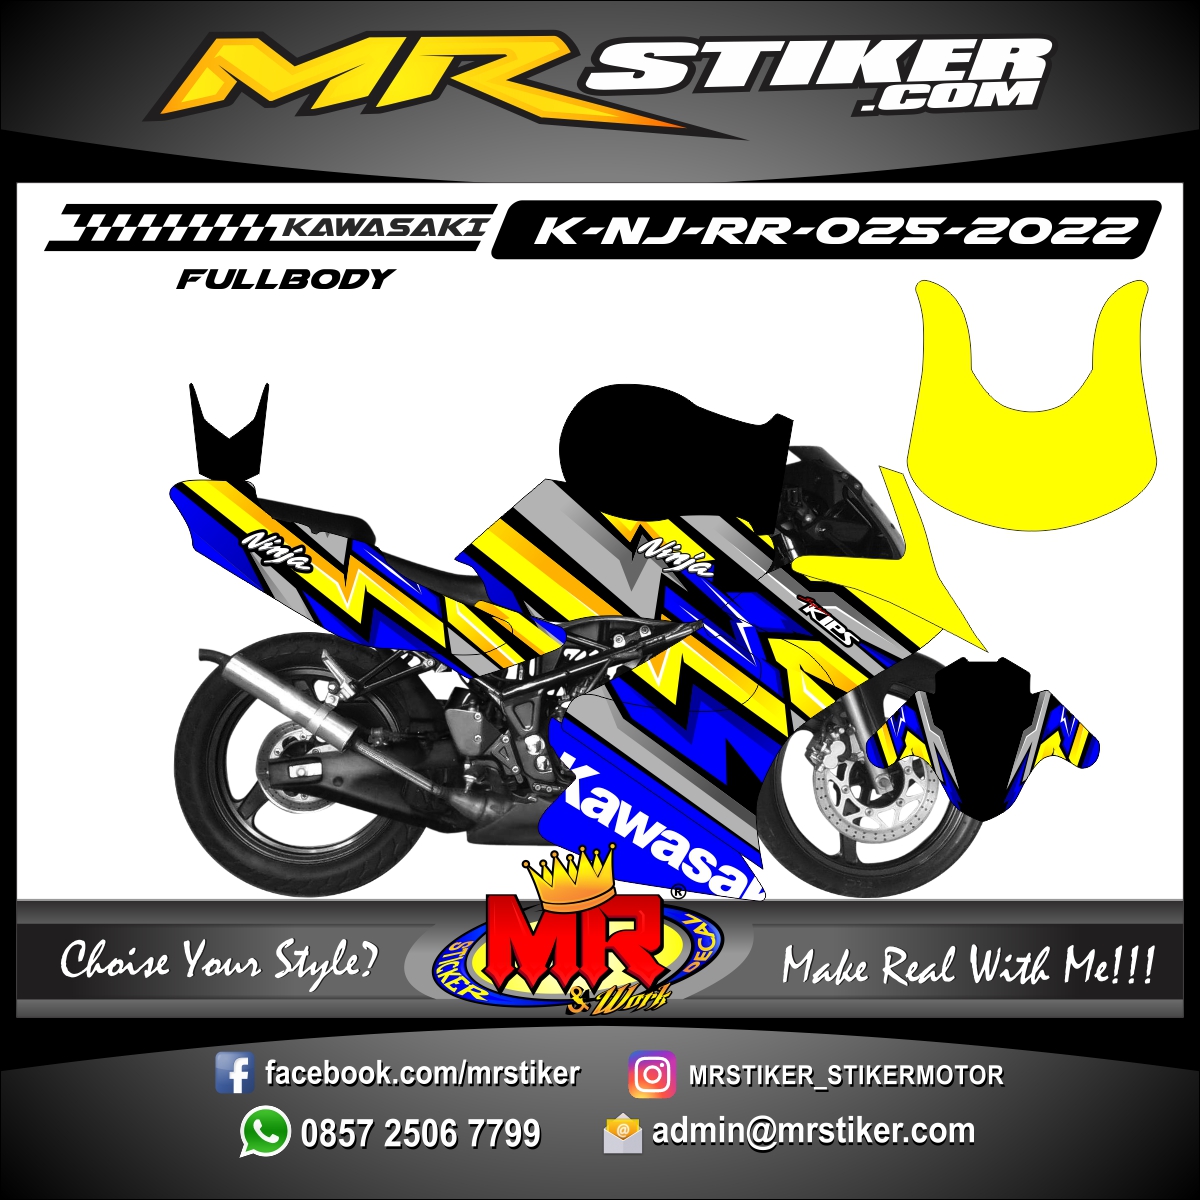 Stiker motor decal Kawasaki Ninja RR Yellow Blue Graphic Sporty Race (FULLBODY)